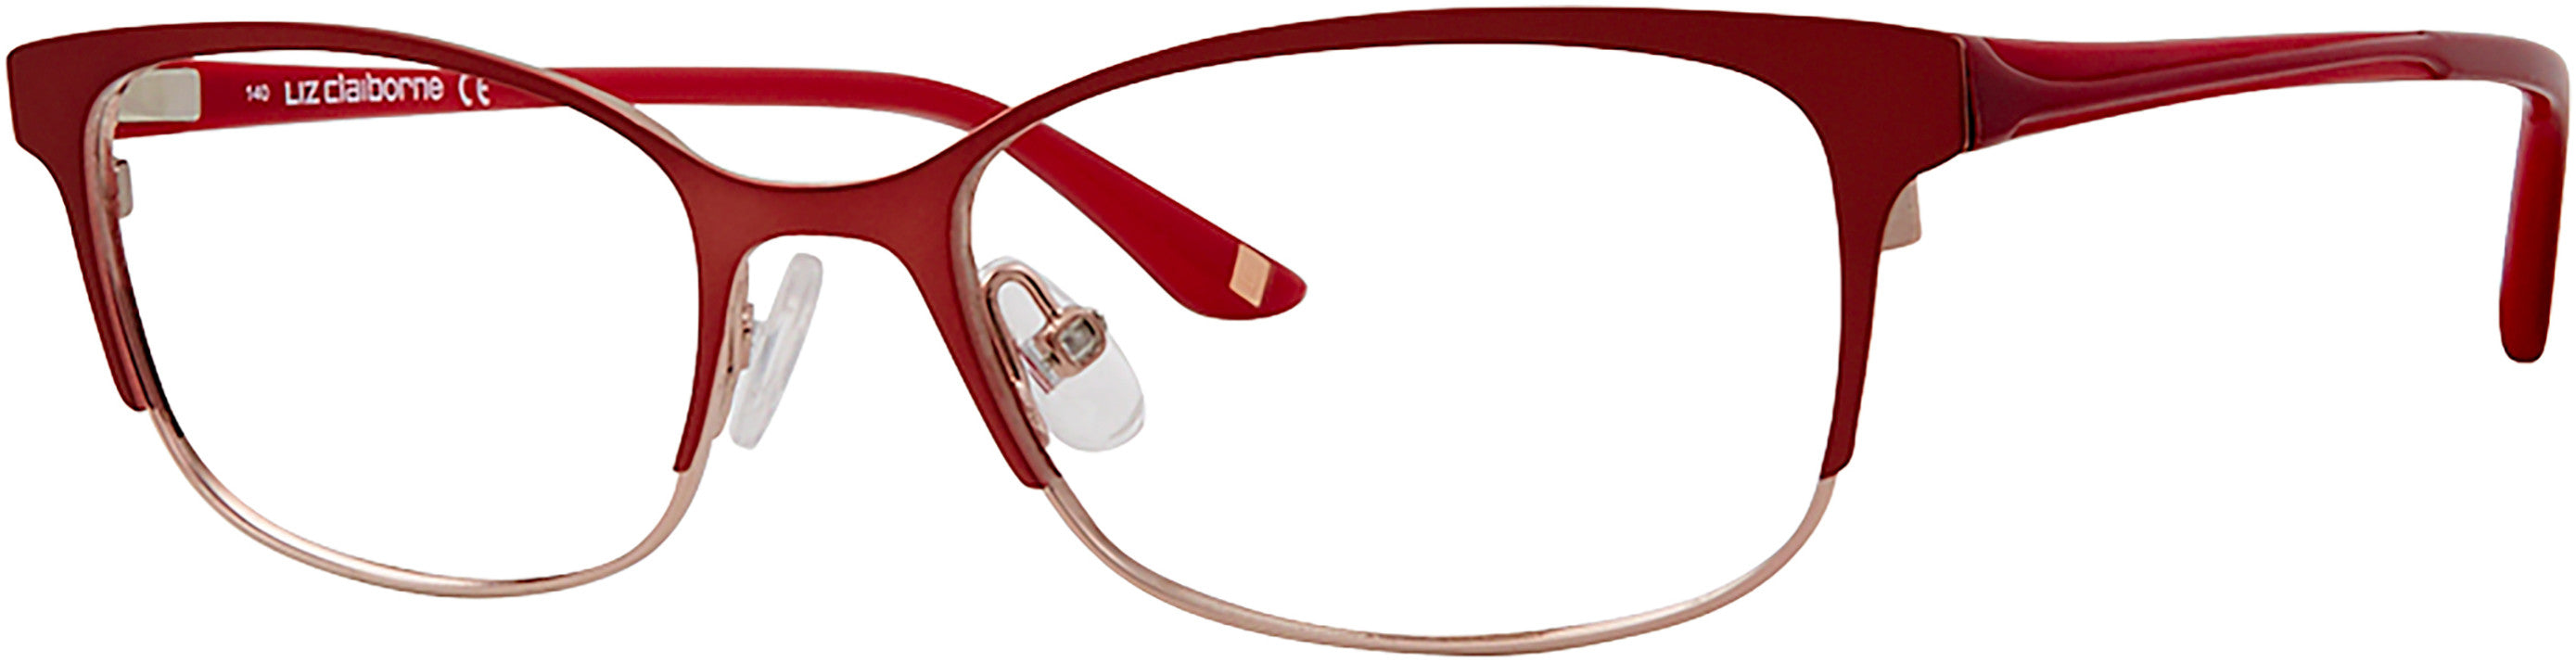  Liz Claiborne 644 Rectangular Eyeglasses 0G1C-0G1C  Redgd Semi Matte (00 Demo Lens)